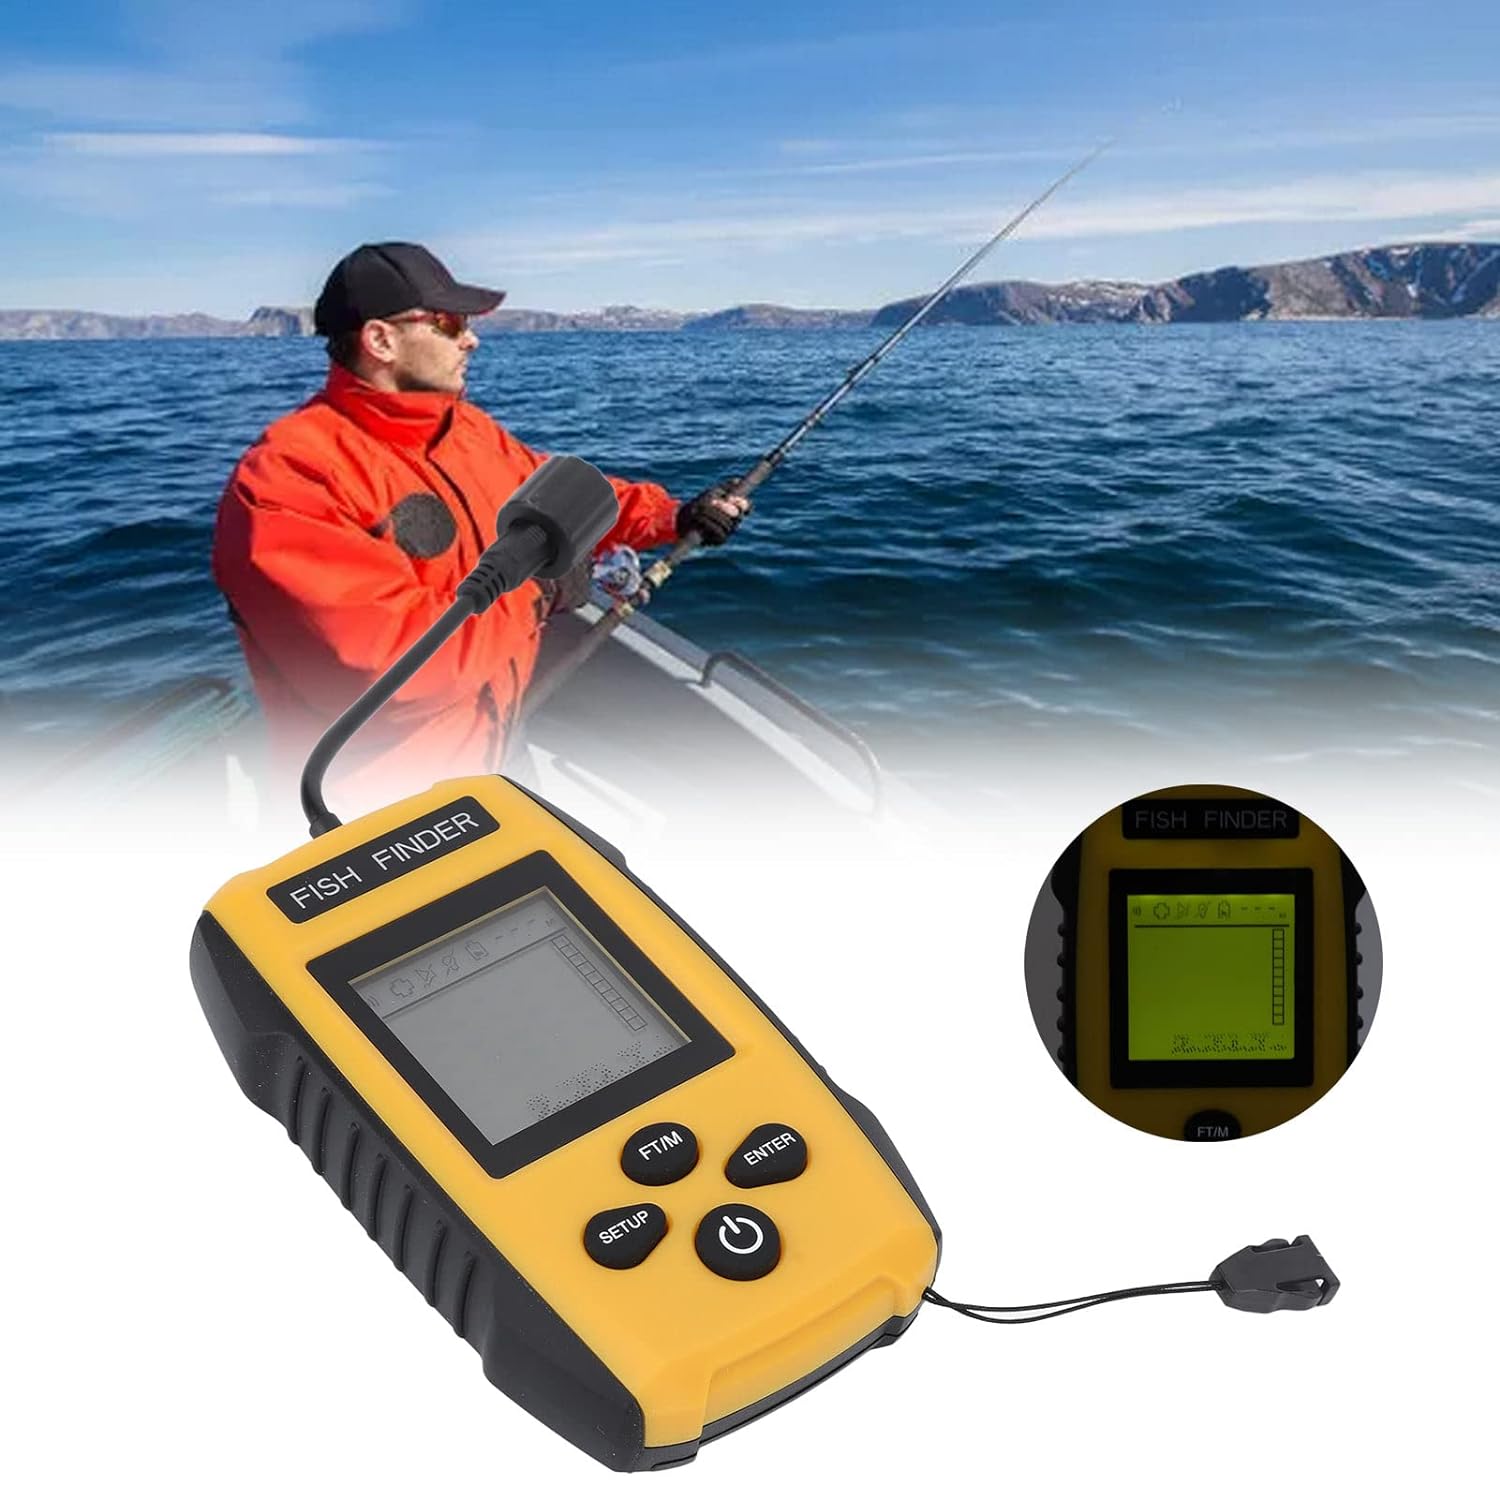 Jauarta Portable Fish Finder Sonar Sensor Kayak Wired Handheld Fish Depth Finder with LCD Display for Boat Lake Sea Ice